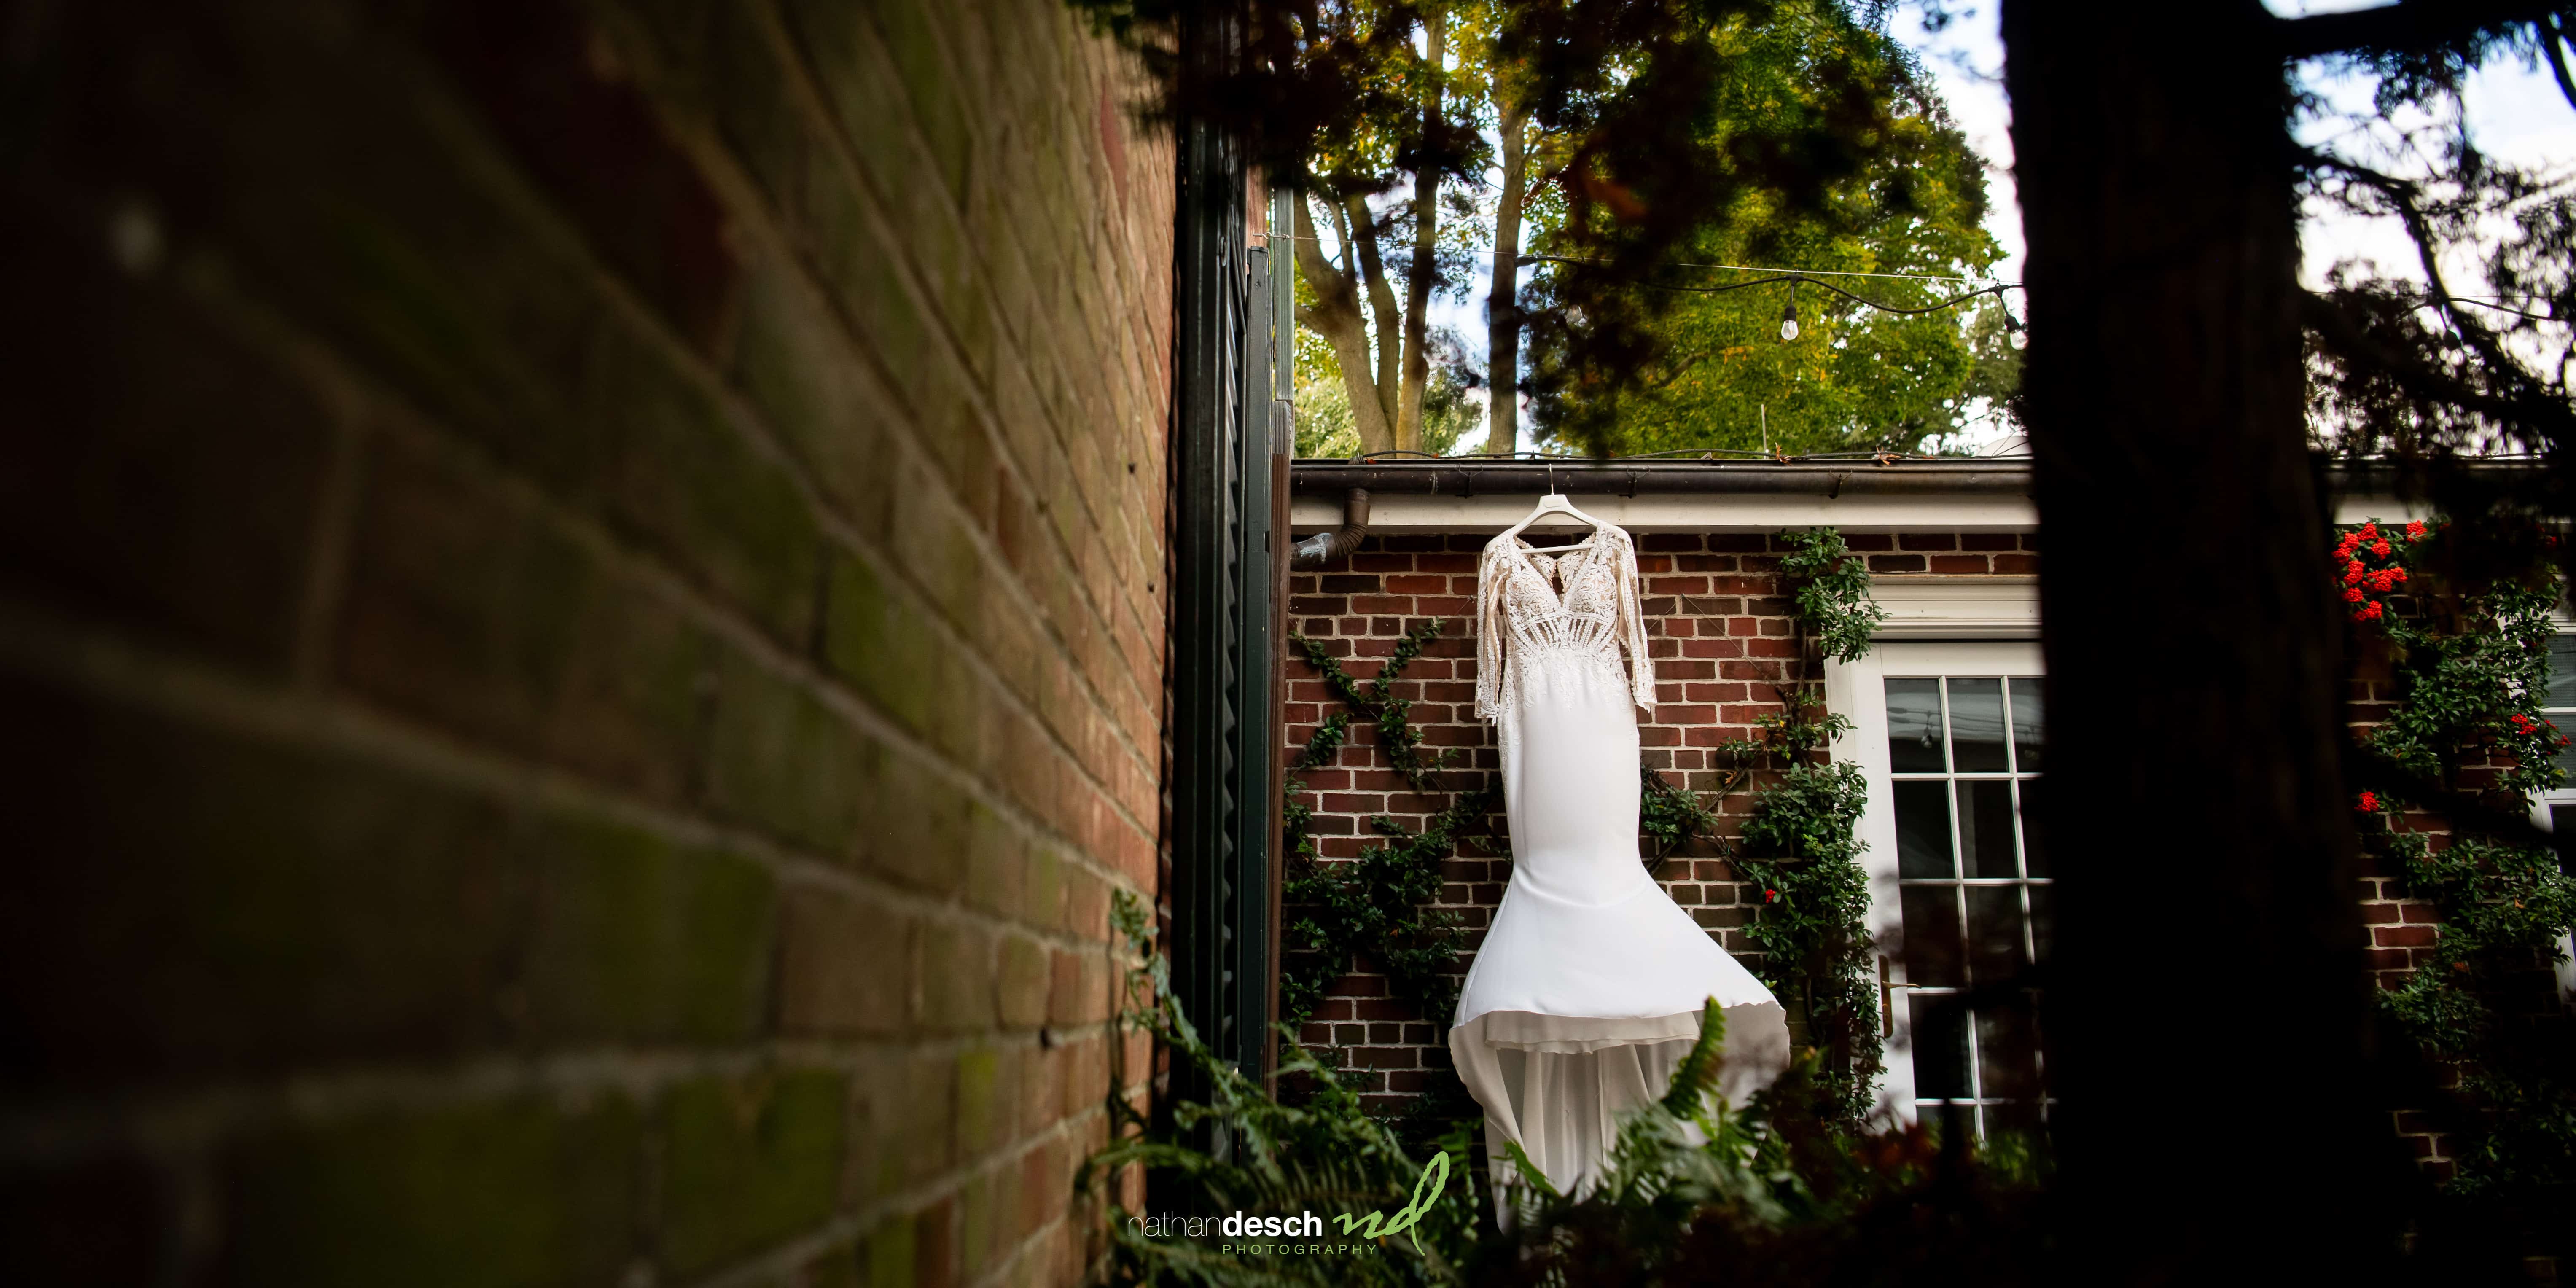 wedding dress hanging outside